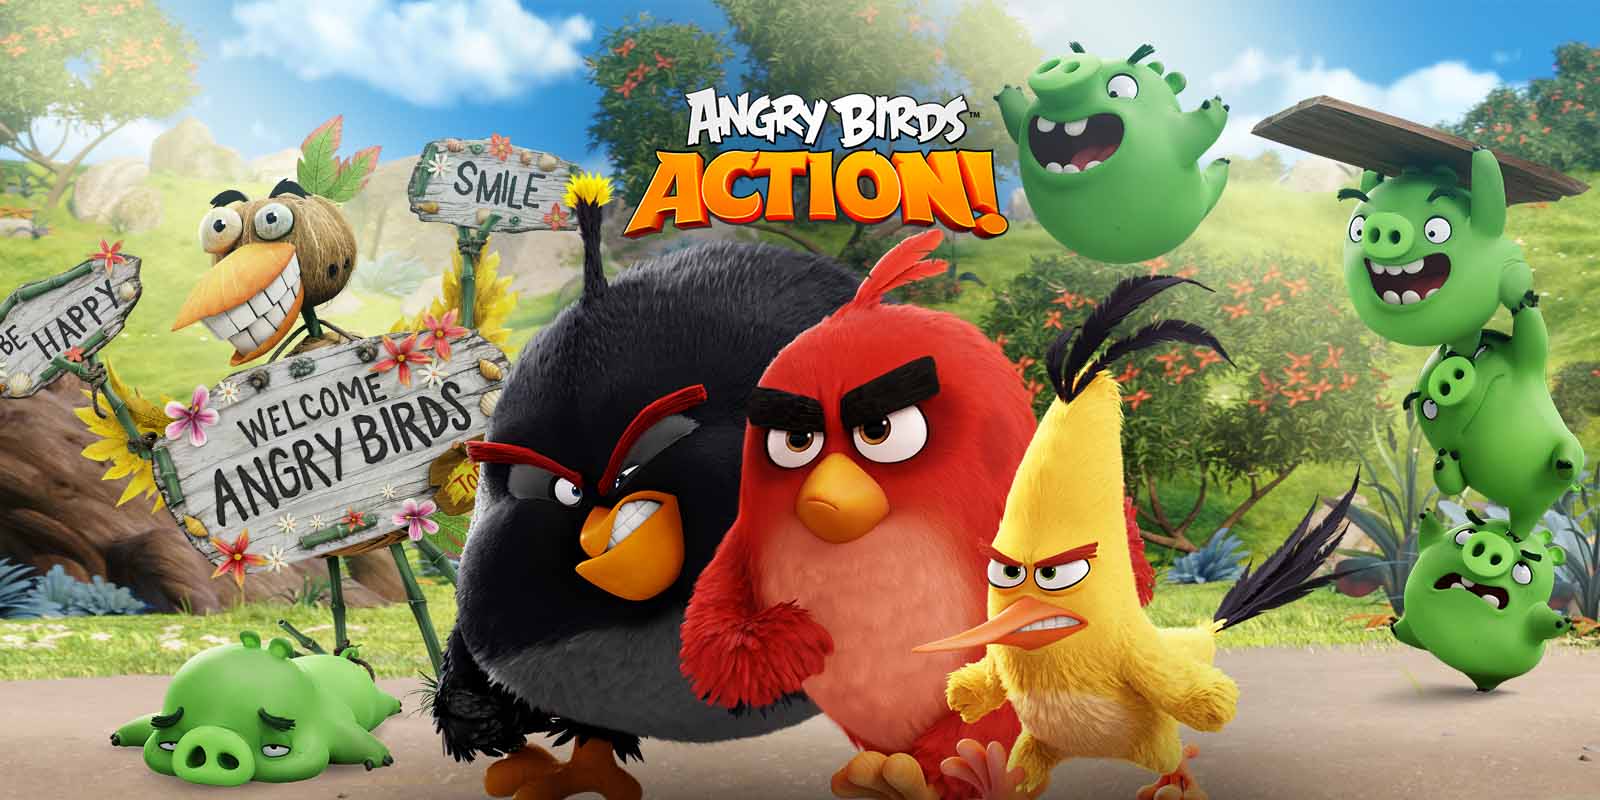 Angry Birds Action! / Rovio